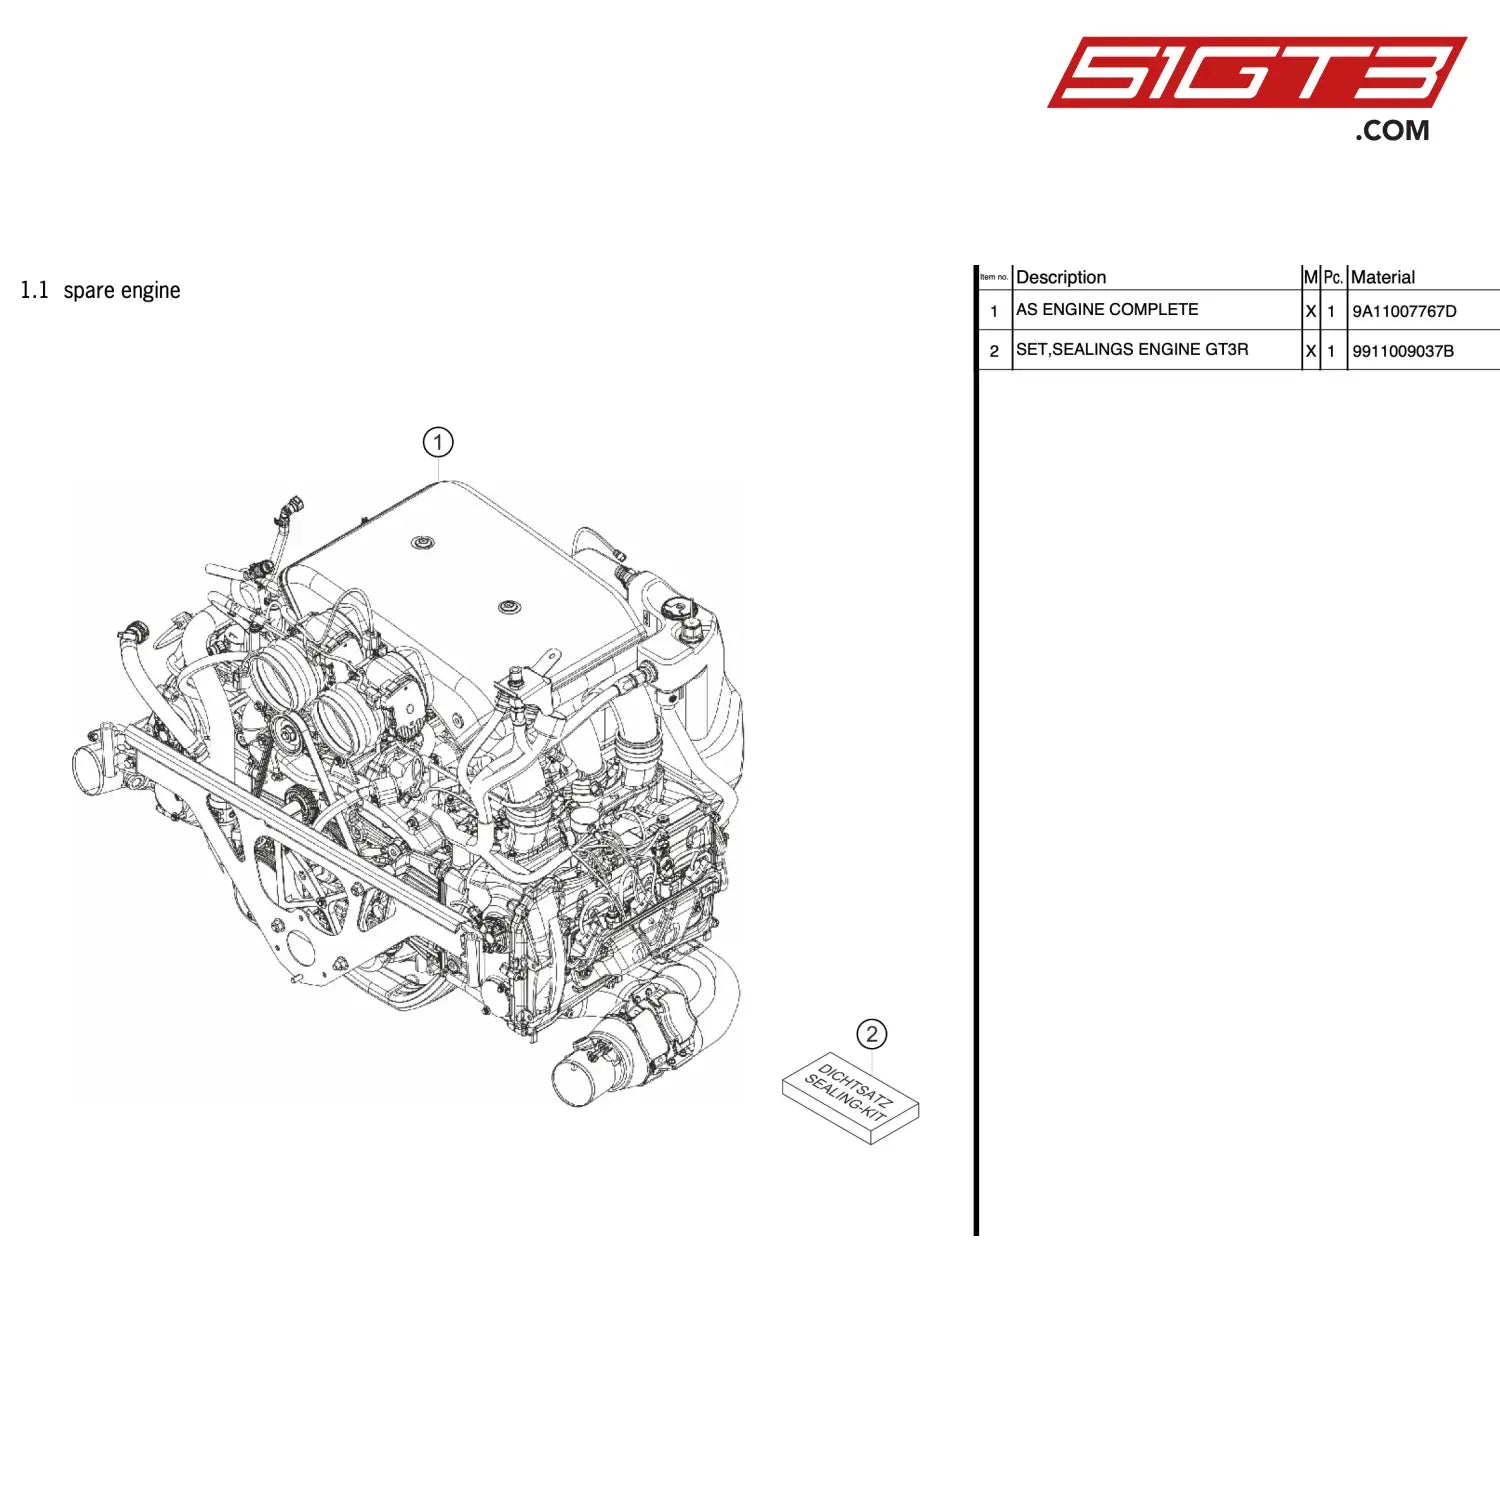 As Engine Complete - 9A11007767D [Porsche 911 Gt3 R Type 991 (Gen 1)] Spare Engine